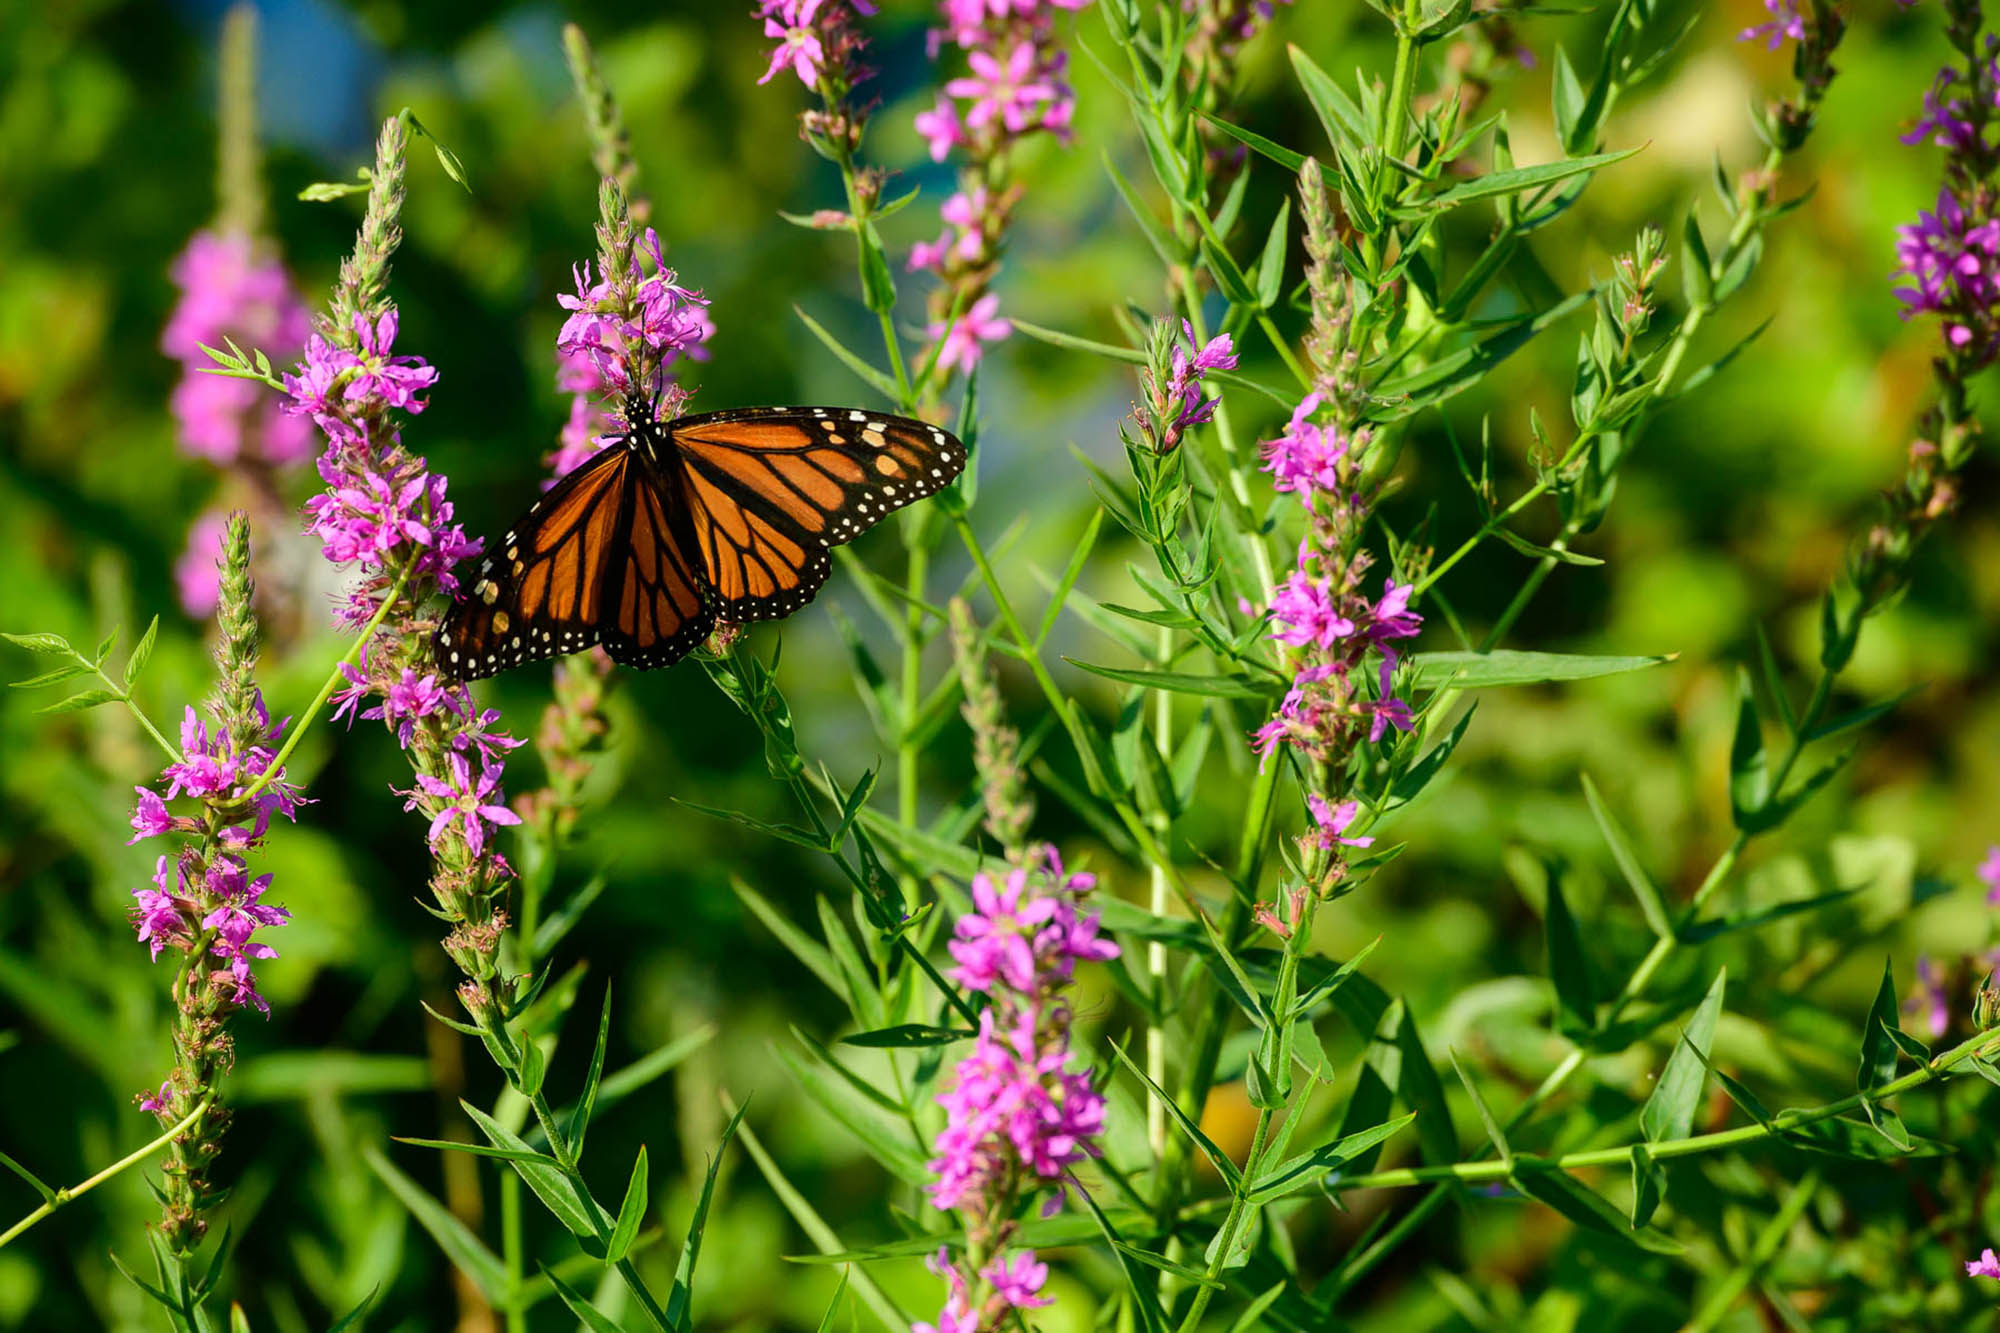 Monarch butterfly on pink flower